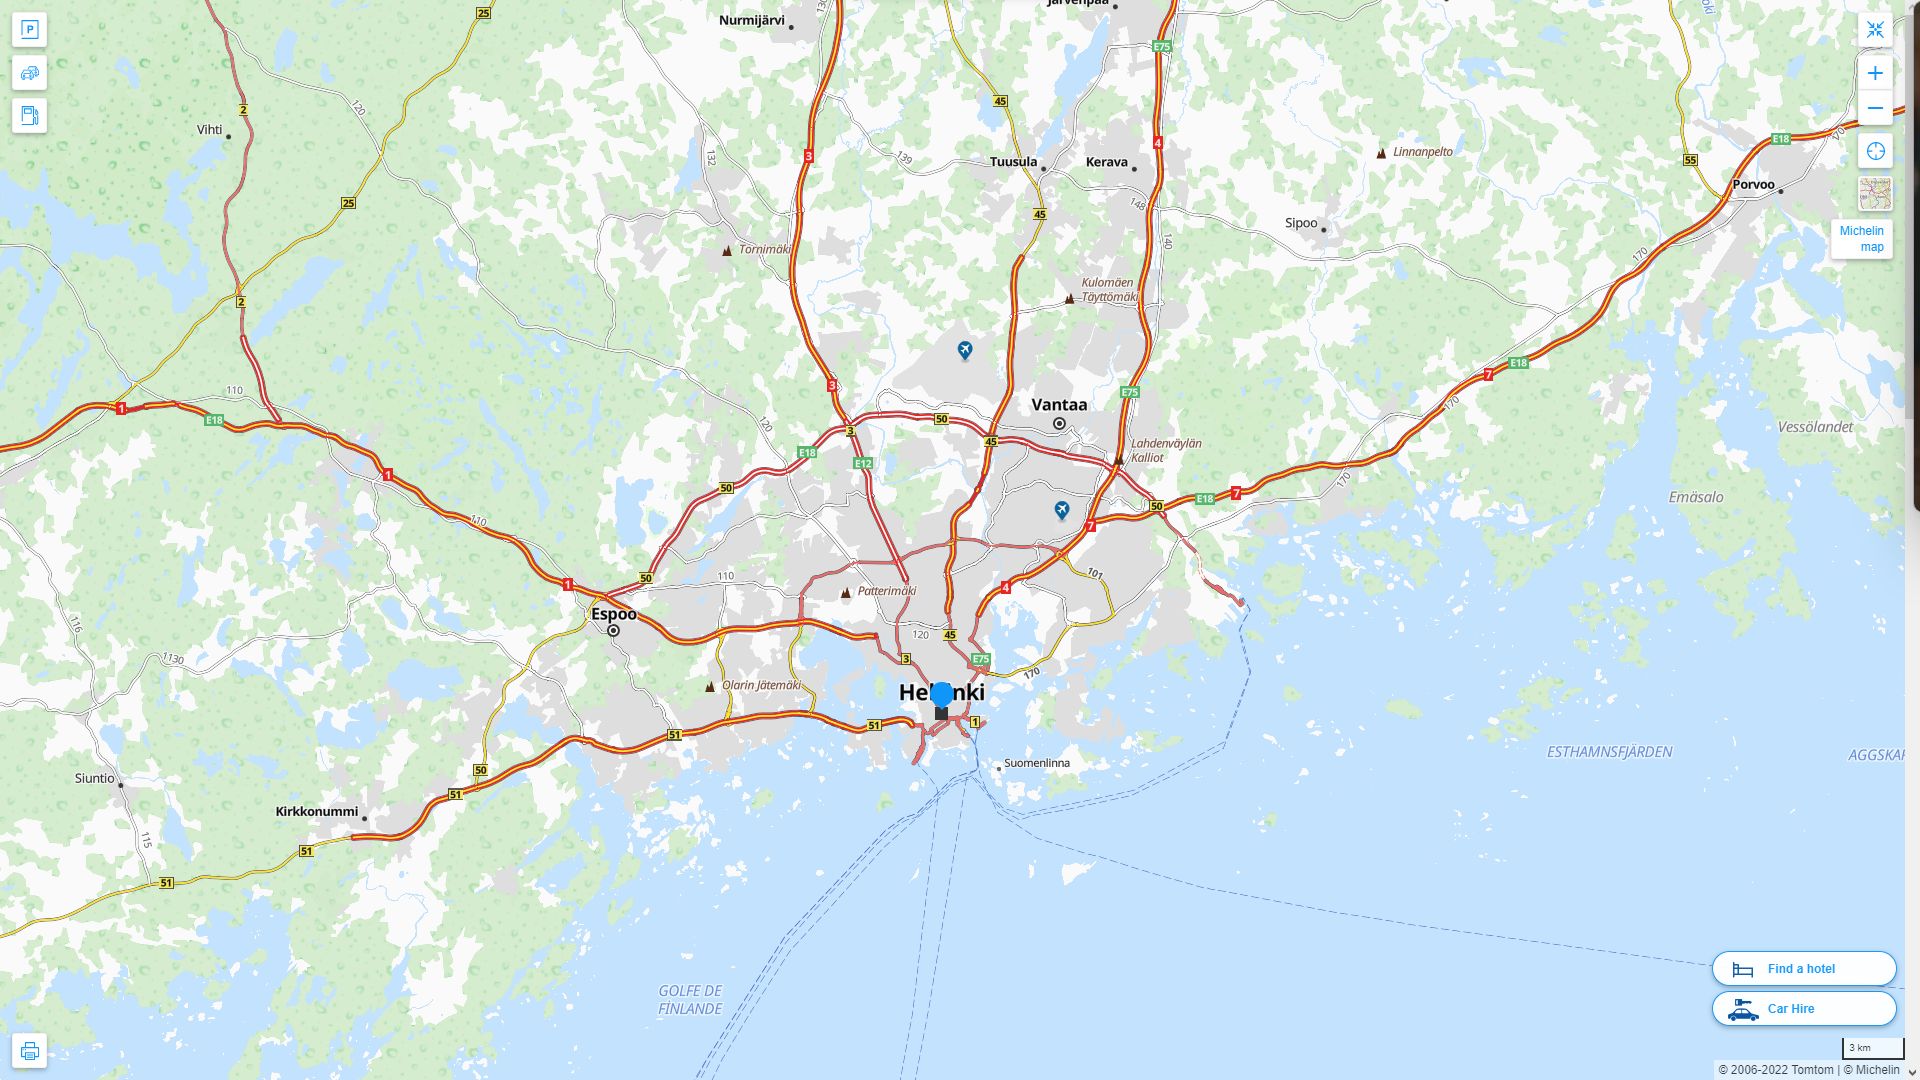 Helsinki Finlande Autoroute et carte routiere